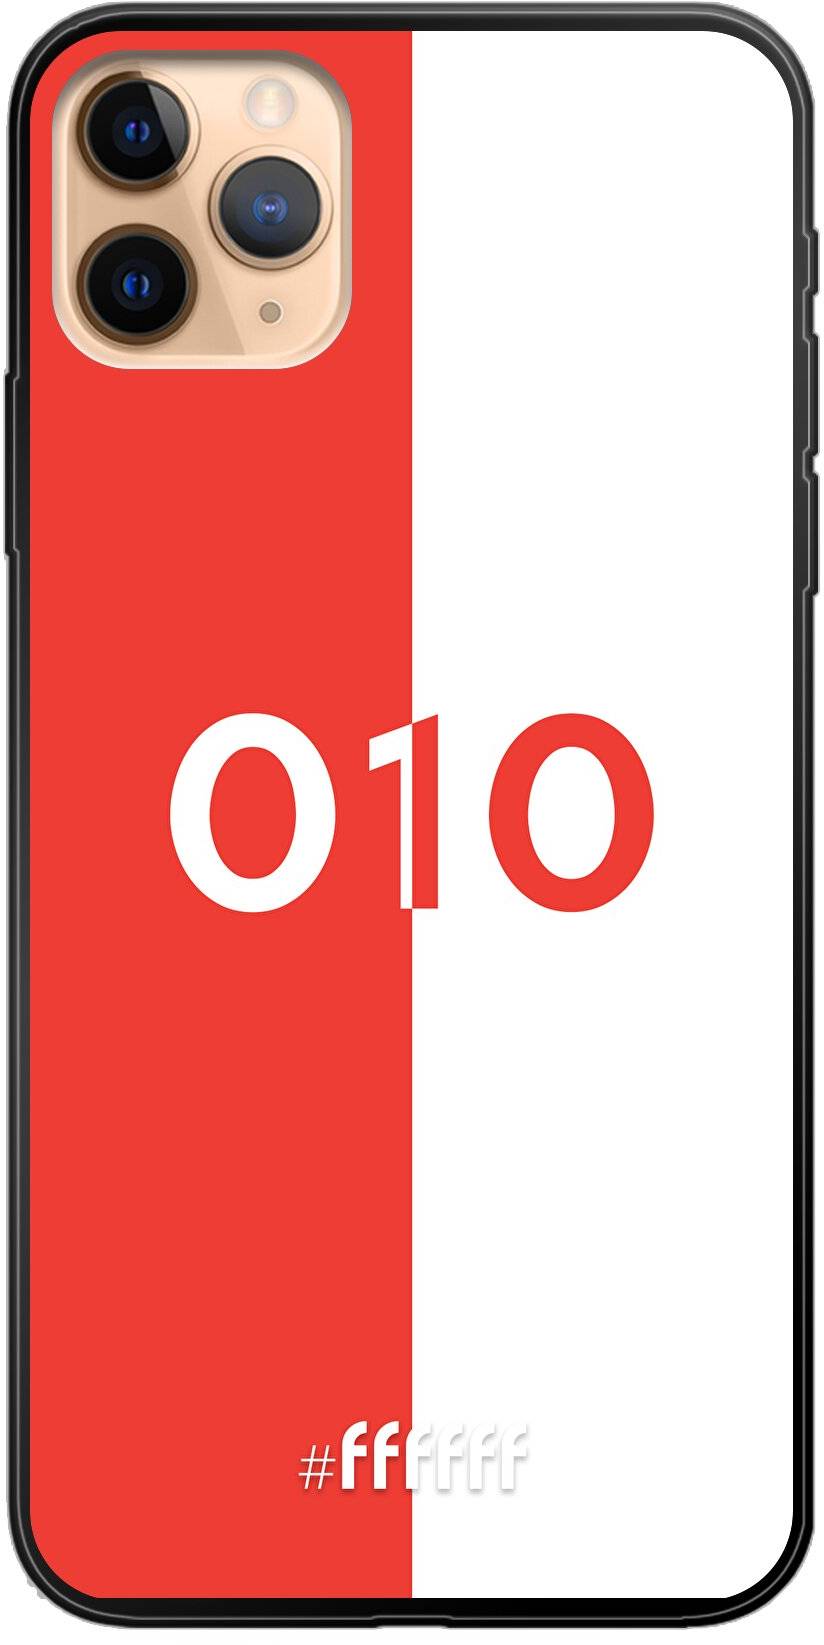 Feyenoord - 010 iPhone 11 Pro Max